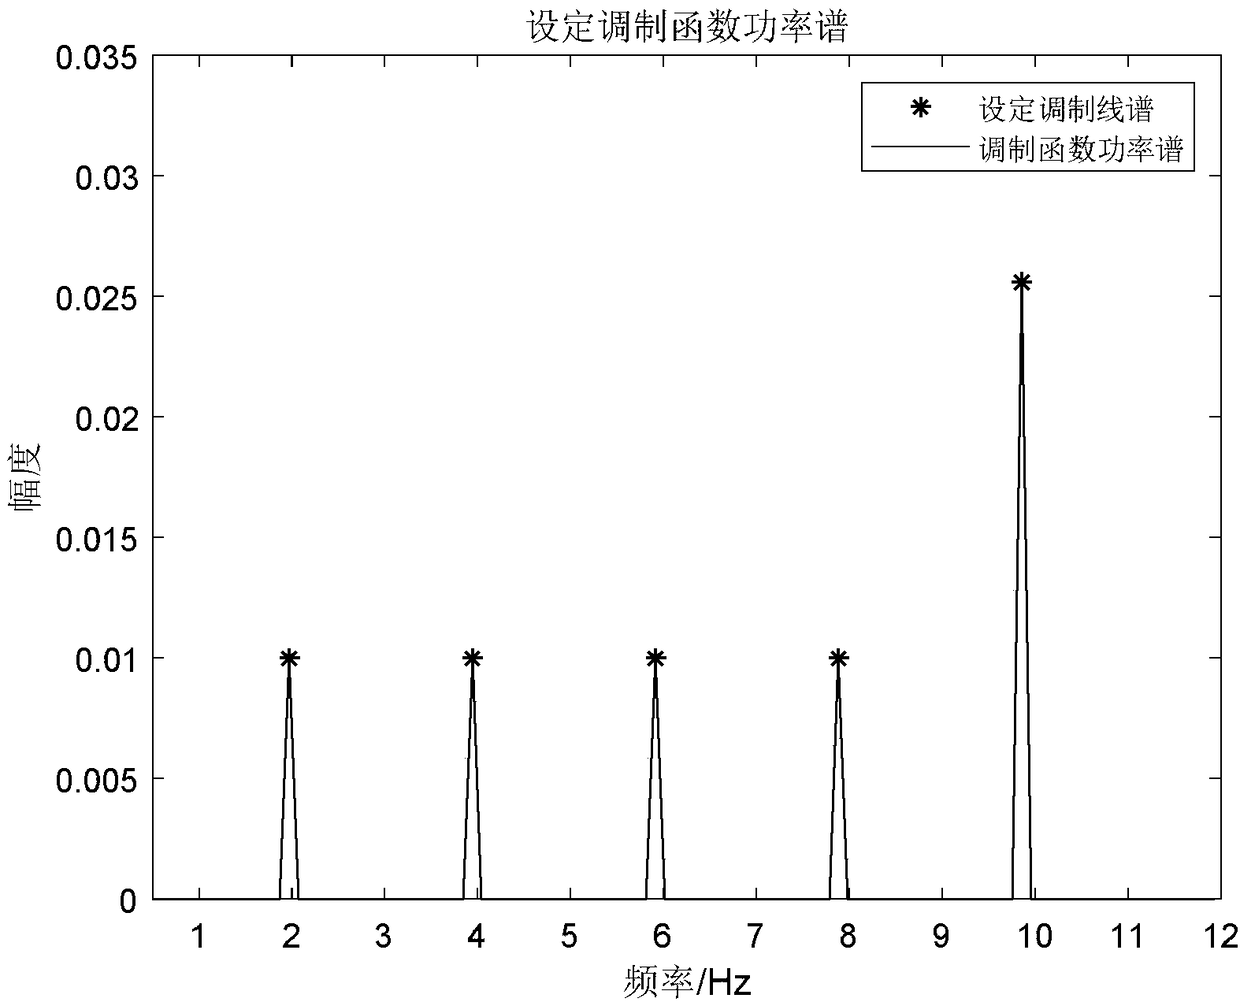 Modulation spectrum characteristic fidelity enhancement method for ship propeller cavitation noise based on adaptive window length